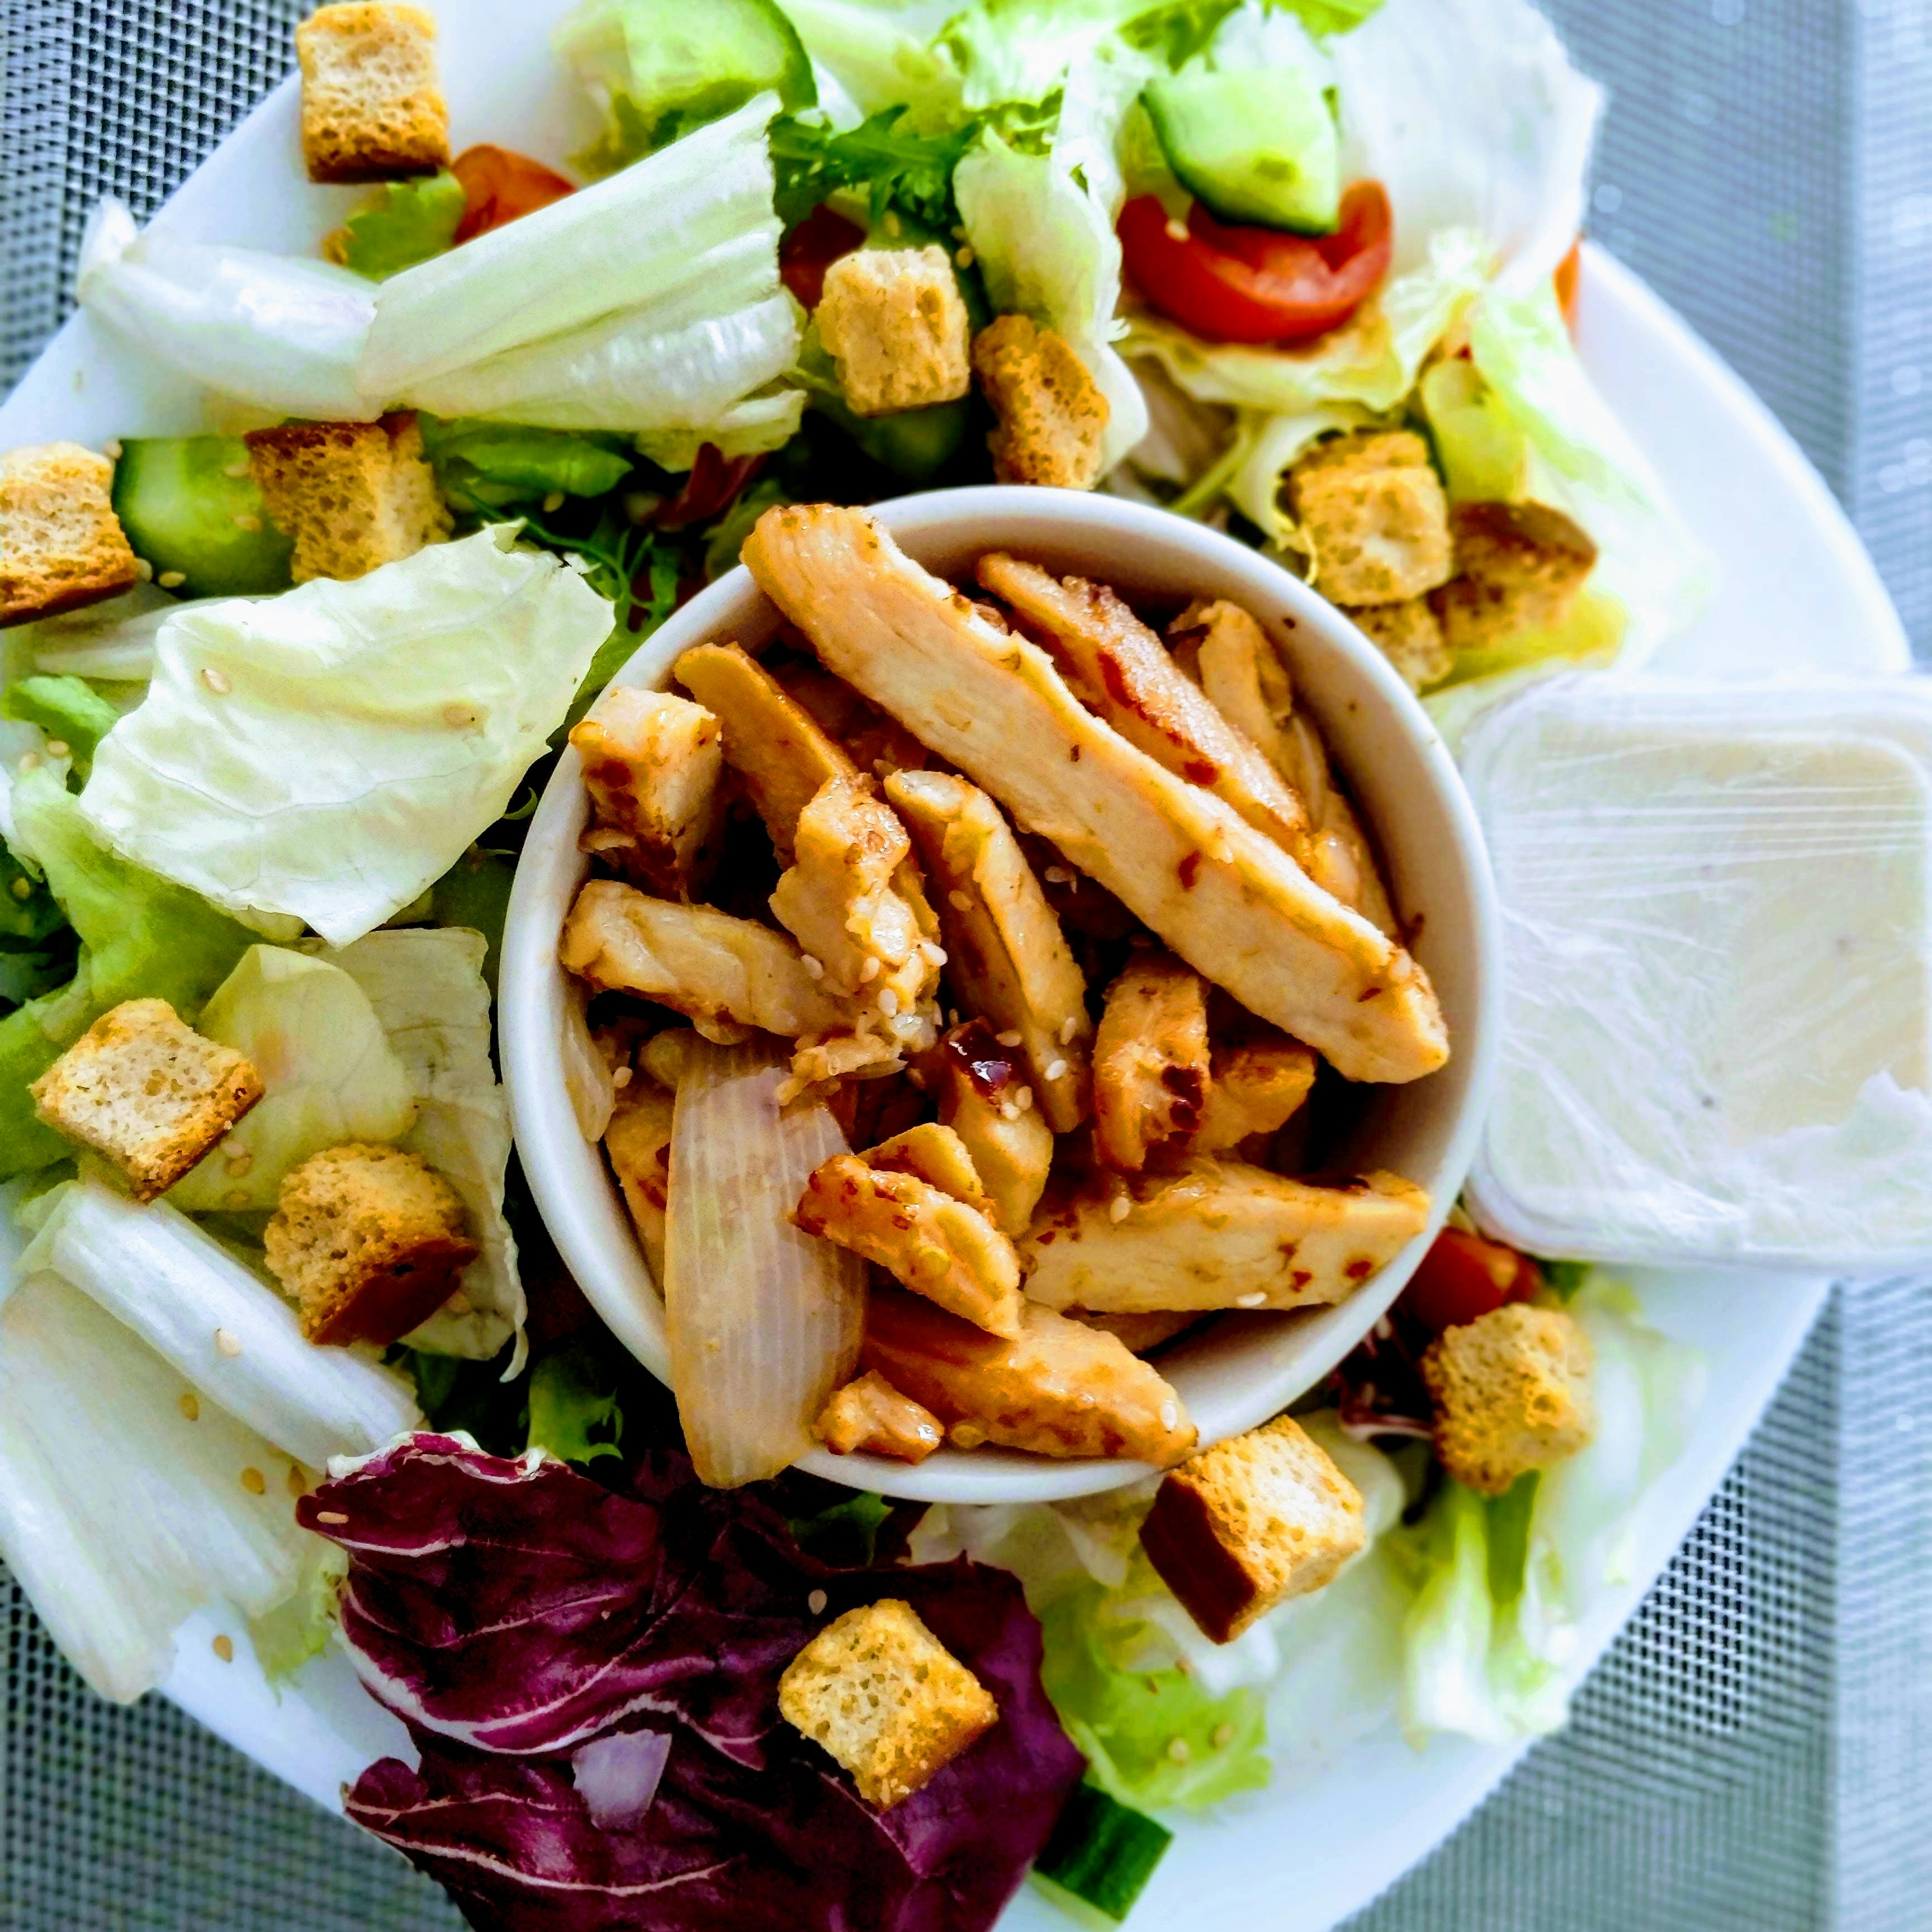 Caesar salad: Η τέλεια συνταγή για σπιτική σαλάτα του Καίσαρα